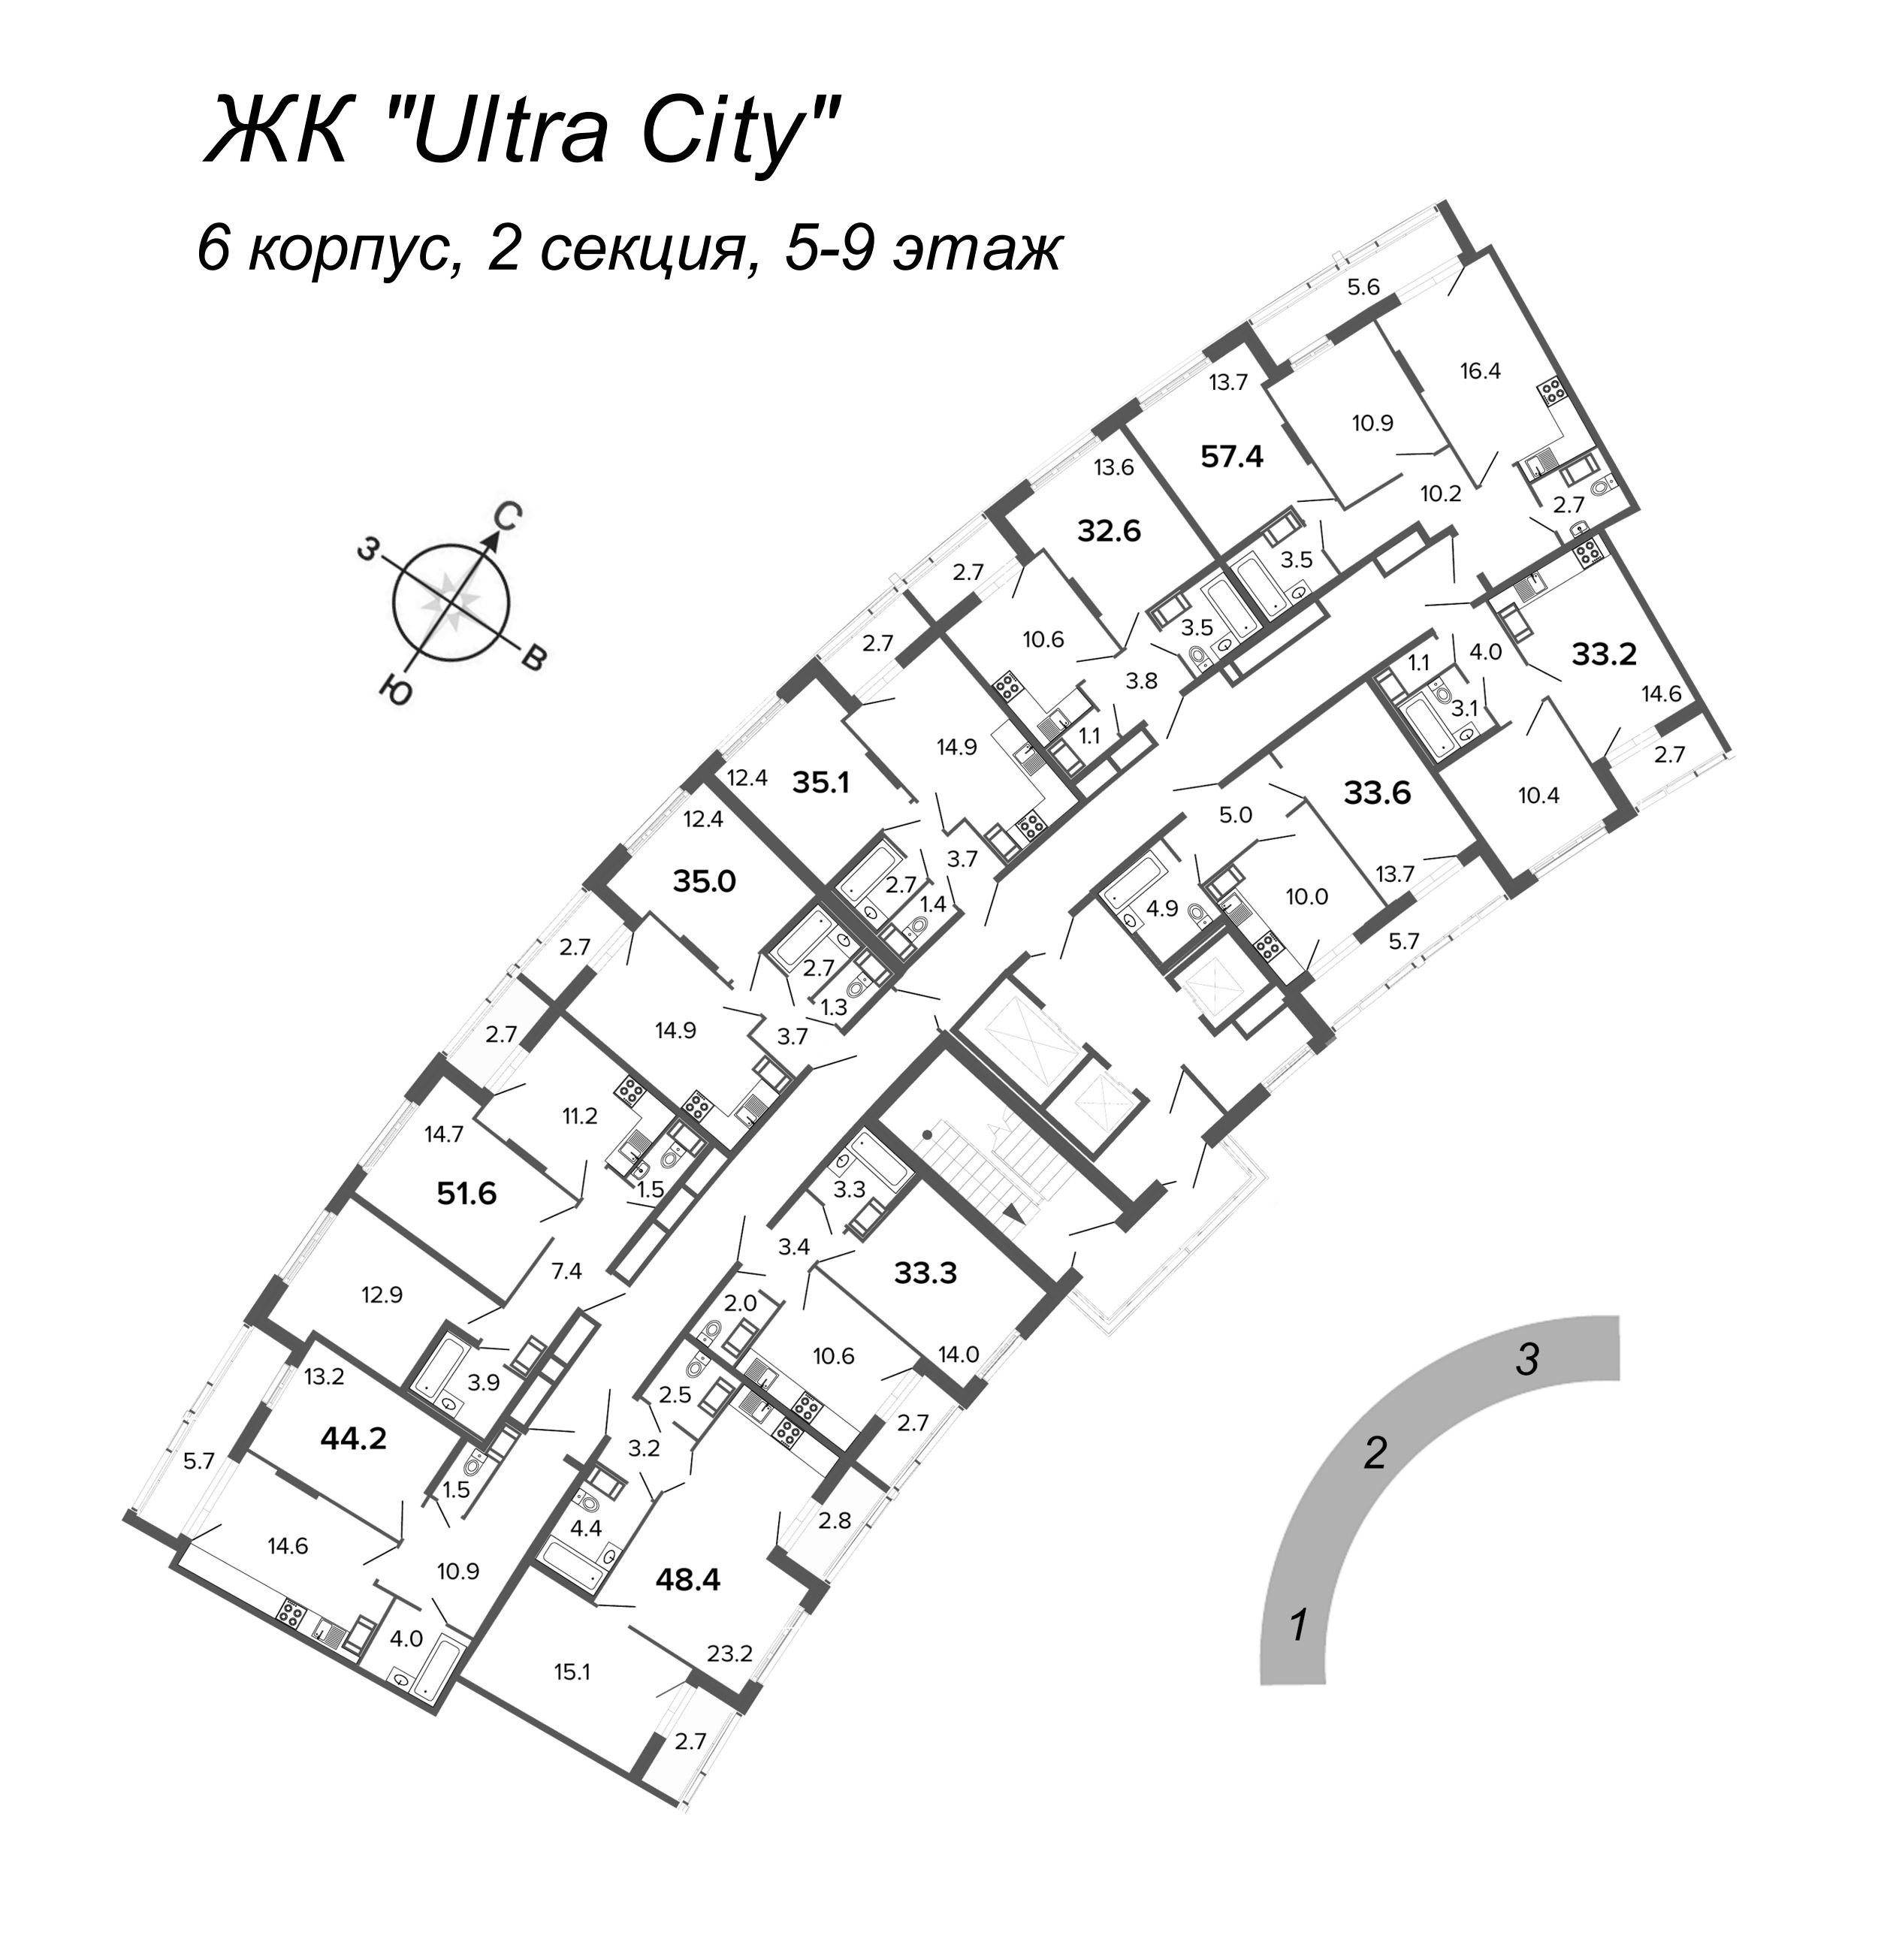 2-комнатная (Евро) квартира, 33.2 м² в ЖК "Ultra City" - планировка этажа